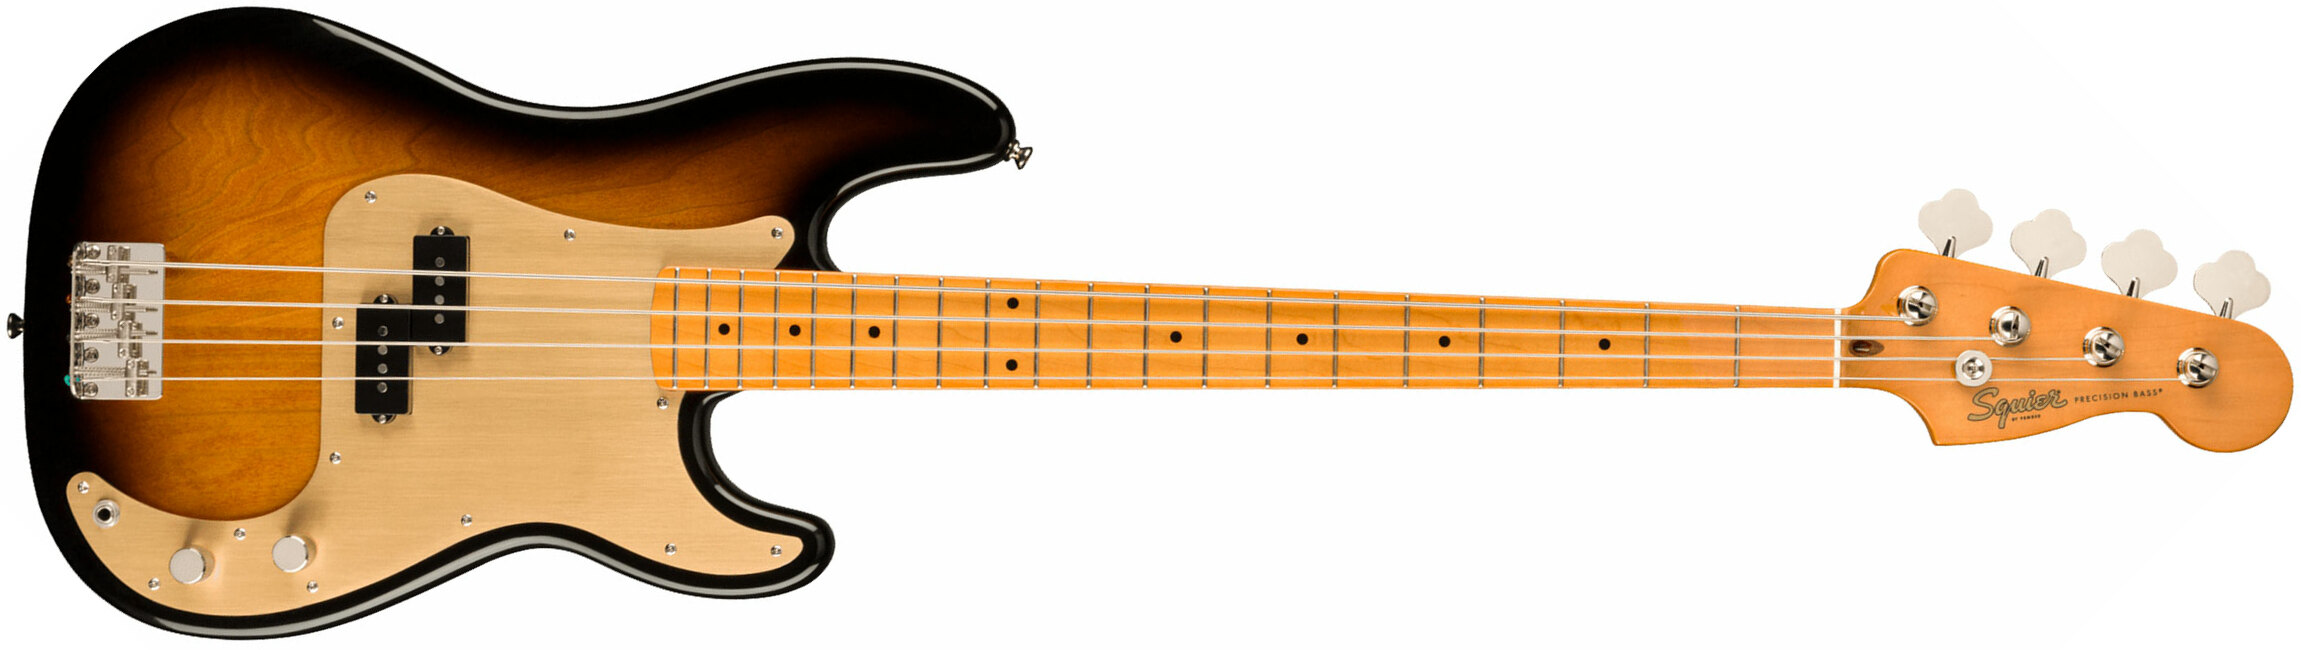 Squier Precision Bass Late '50s Classic Vibe Fsr Ltd Mn - 2-color Sunburst - Solid body electric bass - Main picture